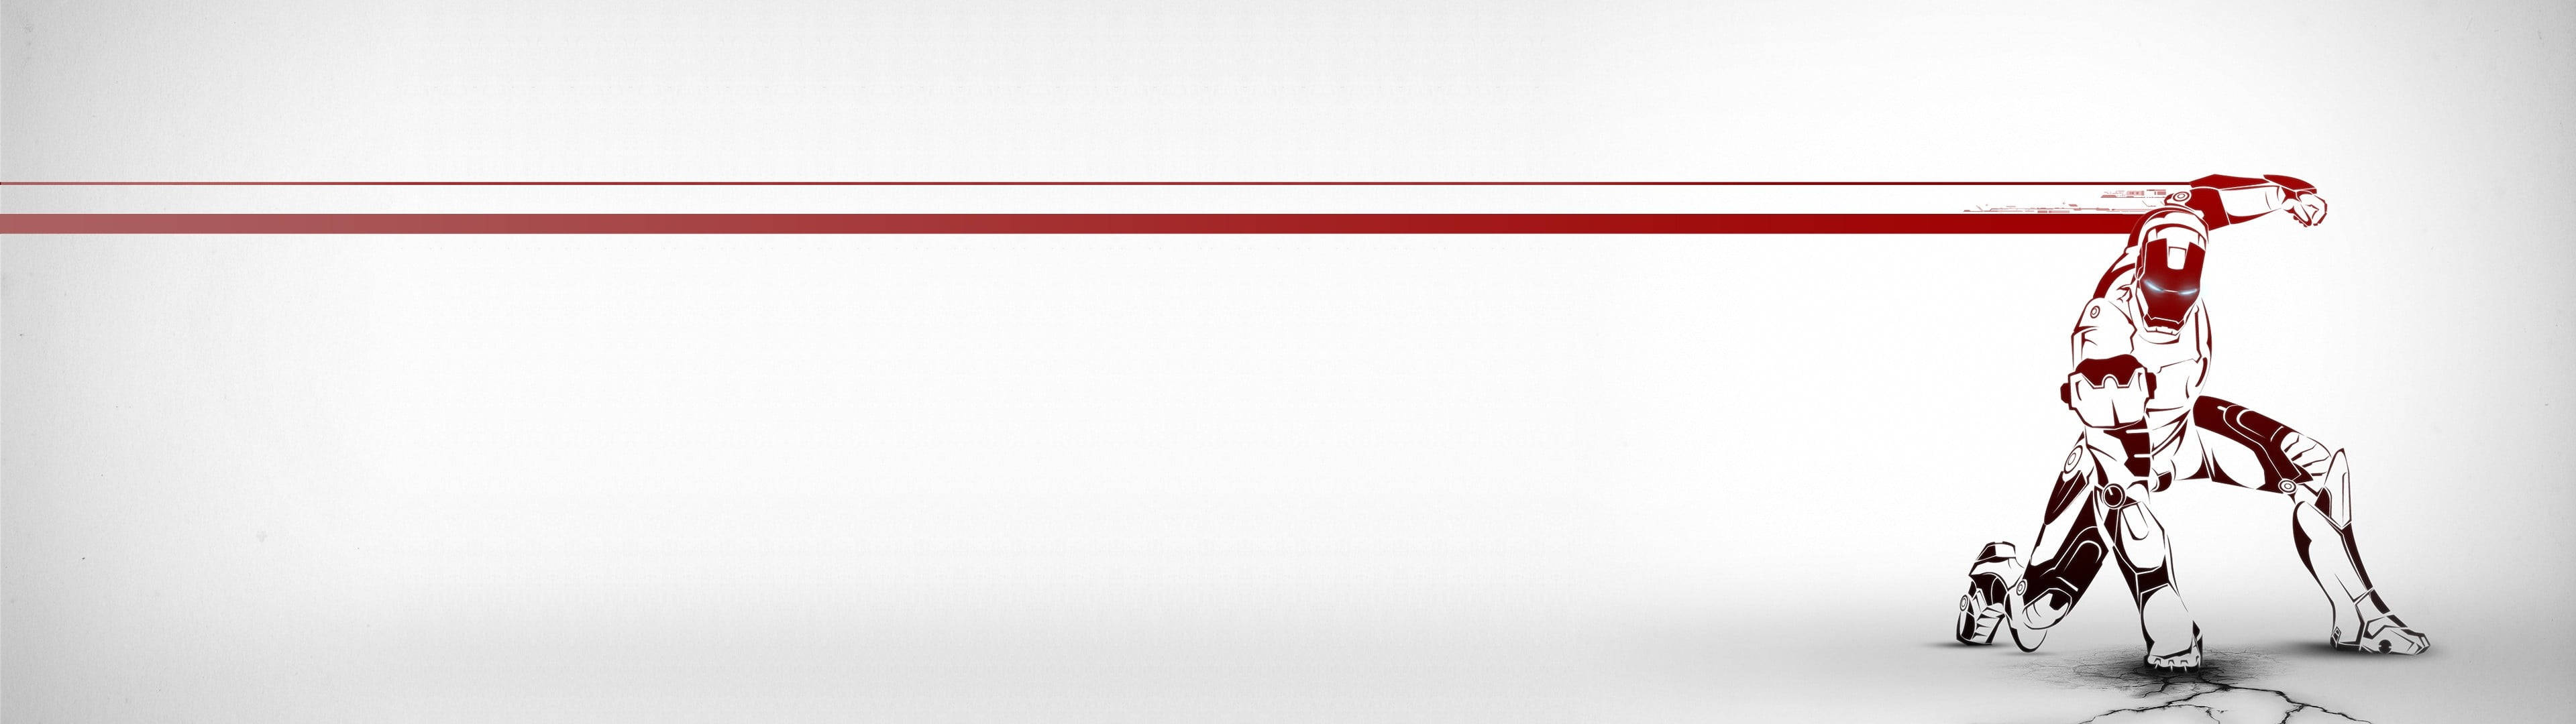 4kmonitor Doble Estético De Iron Man En Rojo Y Blanco. Fondo de pantalla